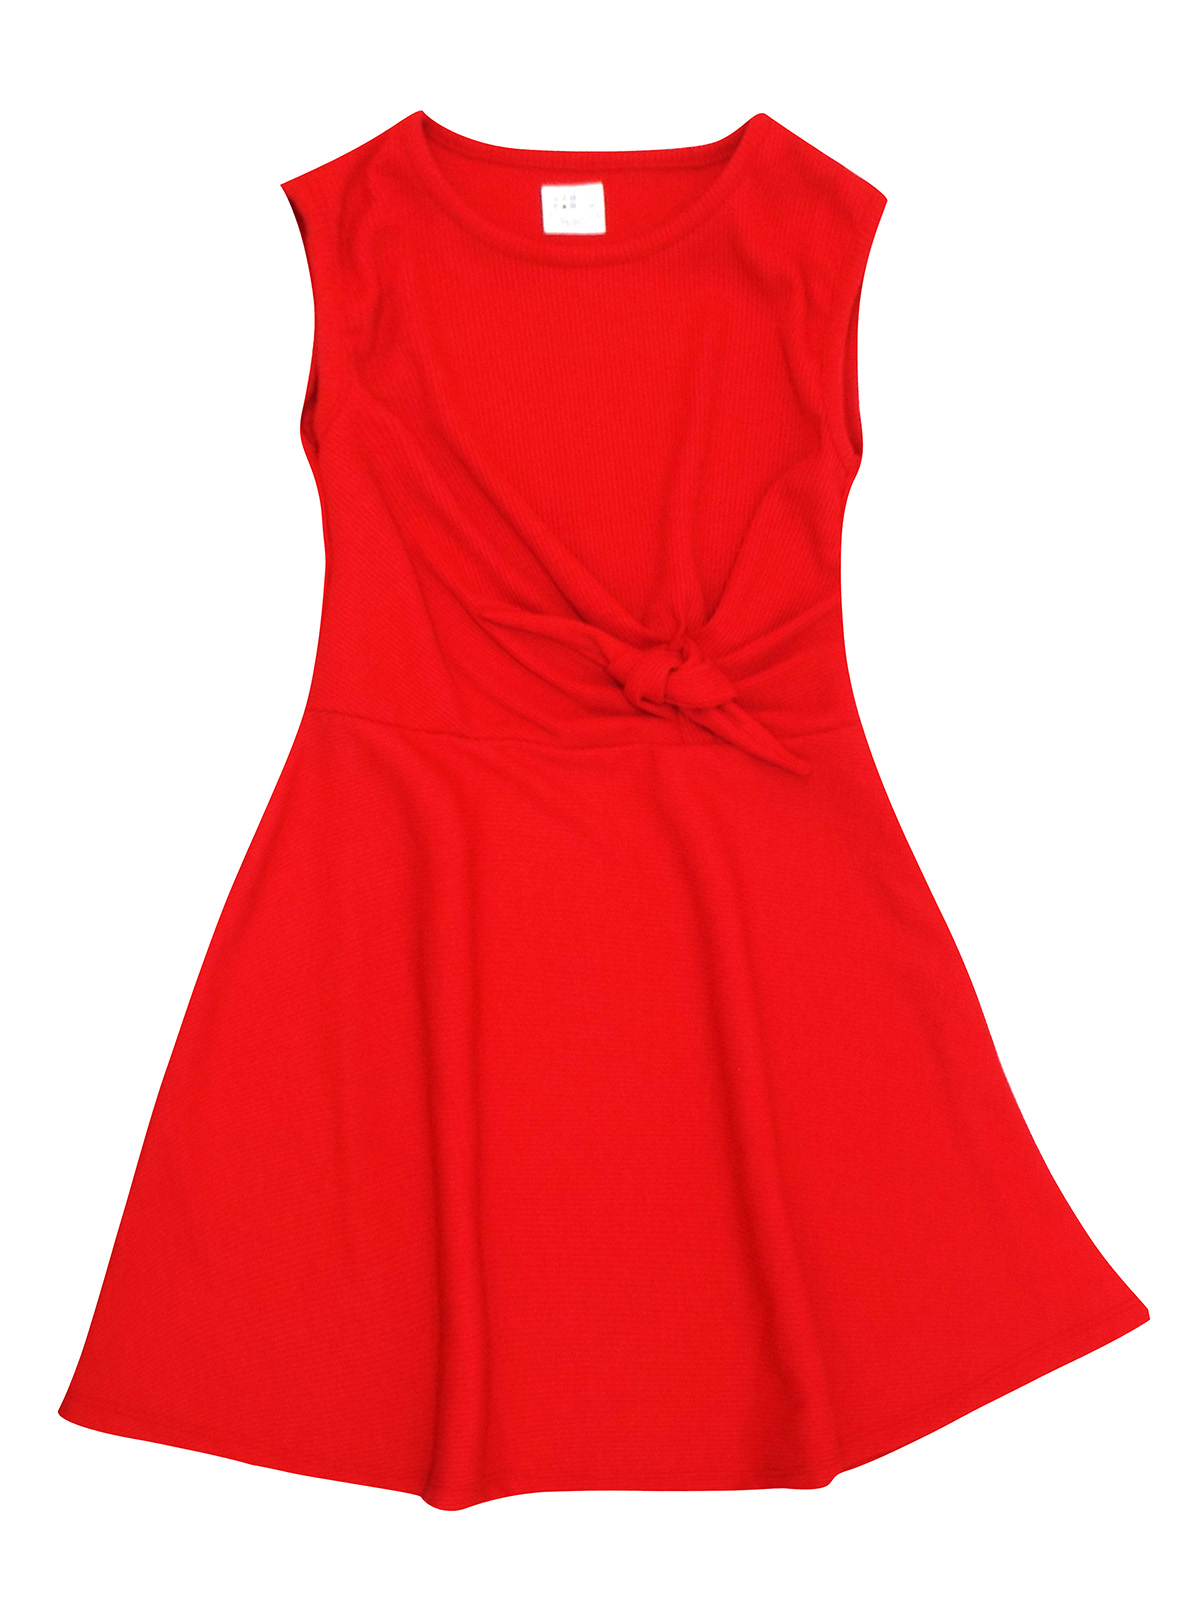 Matalan - - GIRLS RED Sleeveless Tie Waist Dress - Age 18/20mths to 6/7yrs